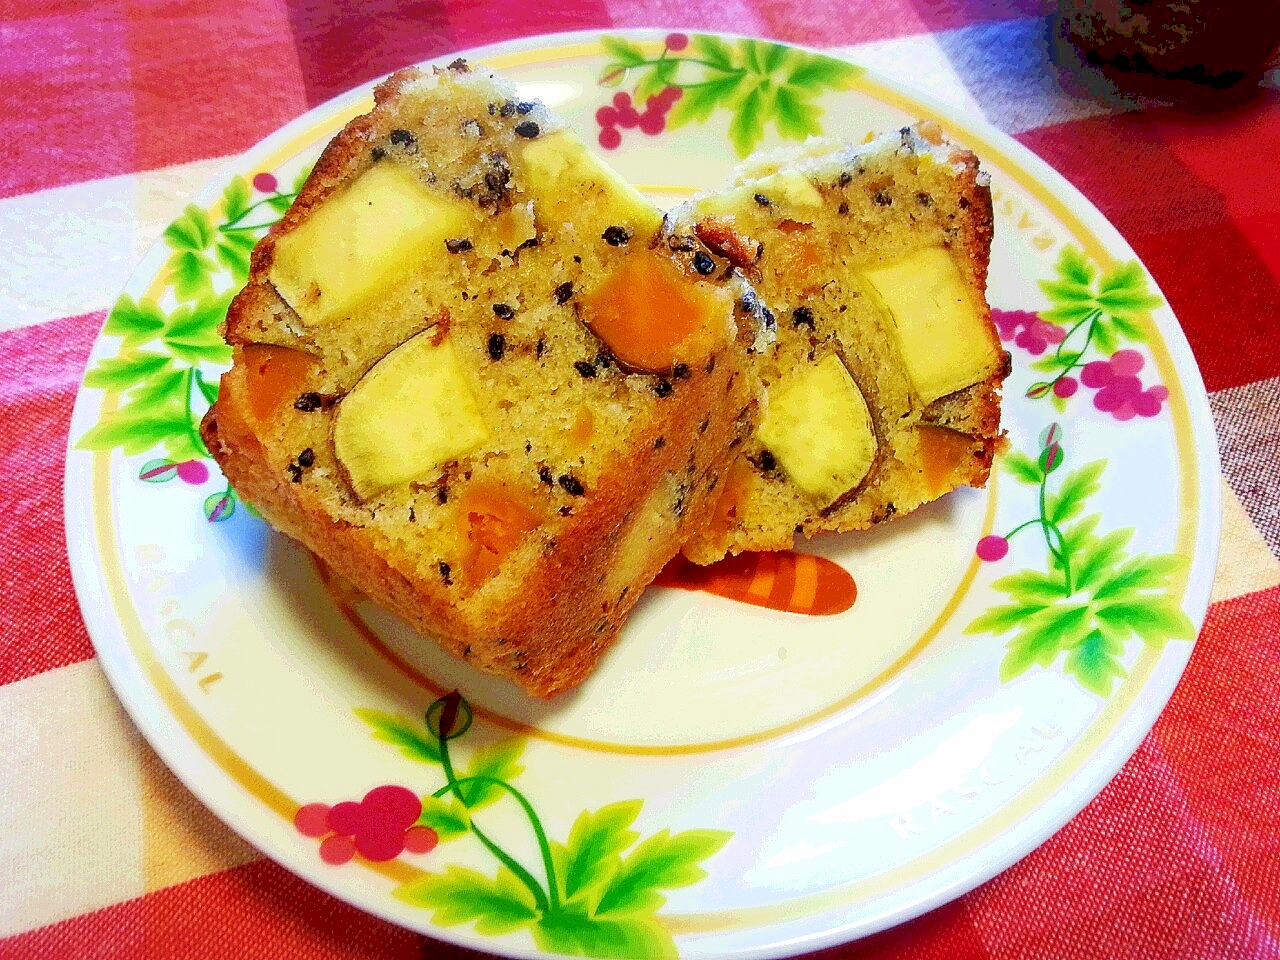 Hmで サツマイモとカボチャのパウンドケーキ レシピ 作り方 By こぶた 楽天レシピ